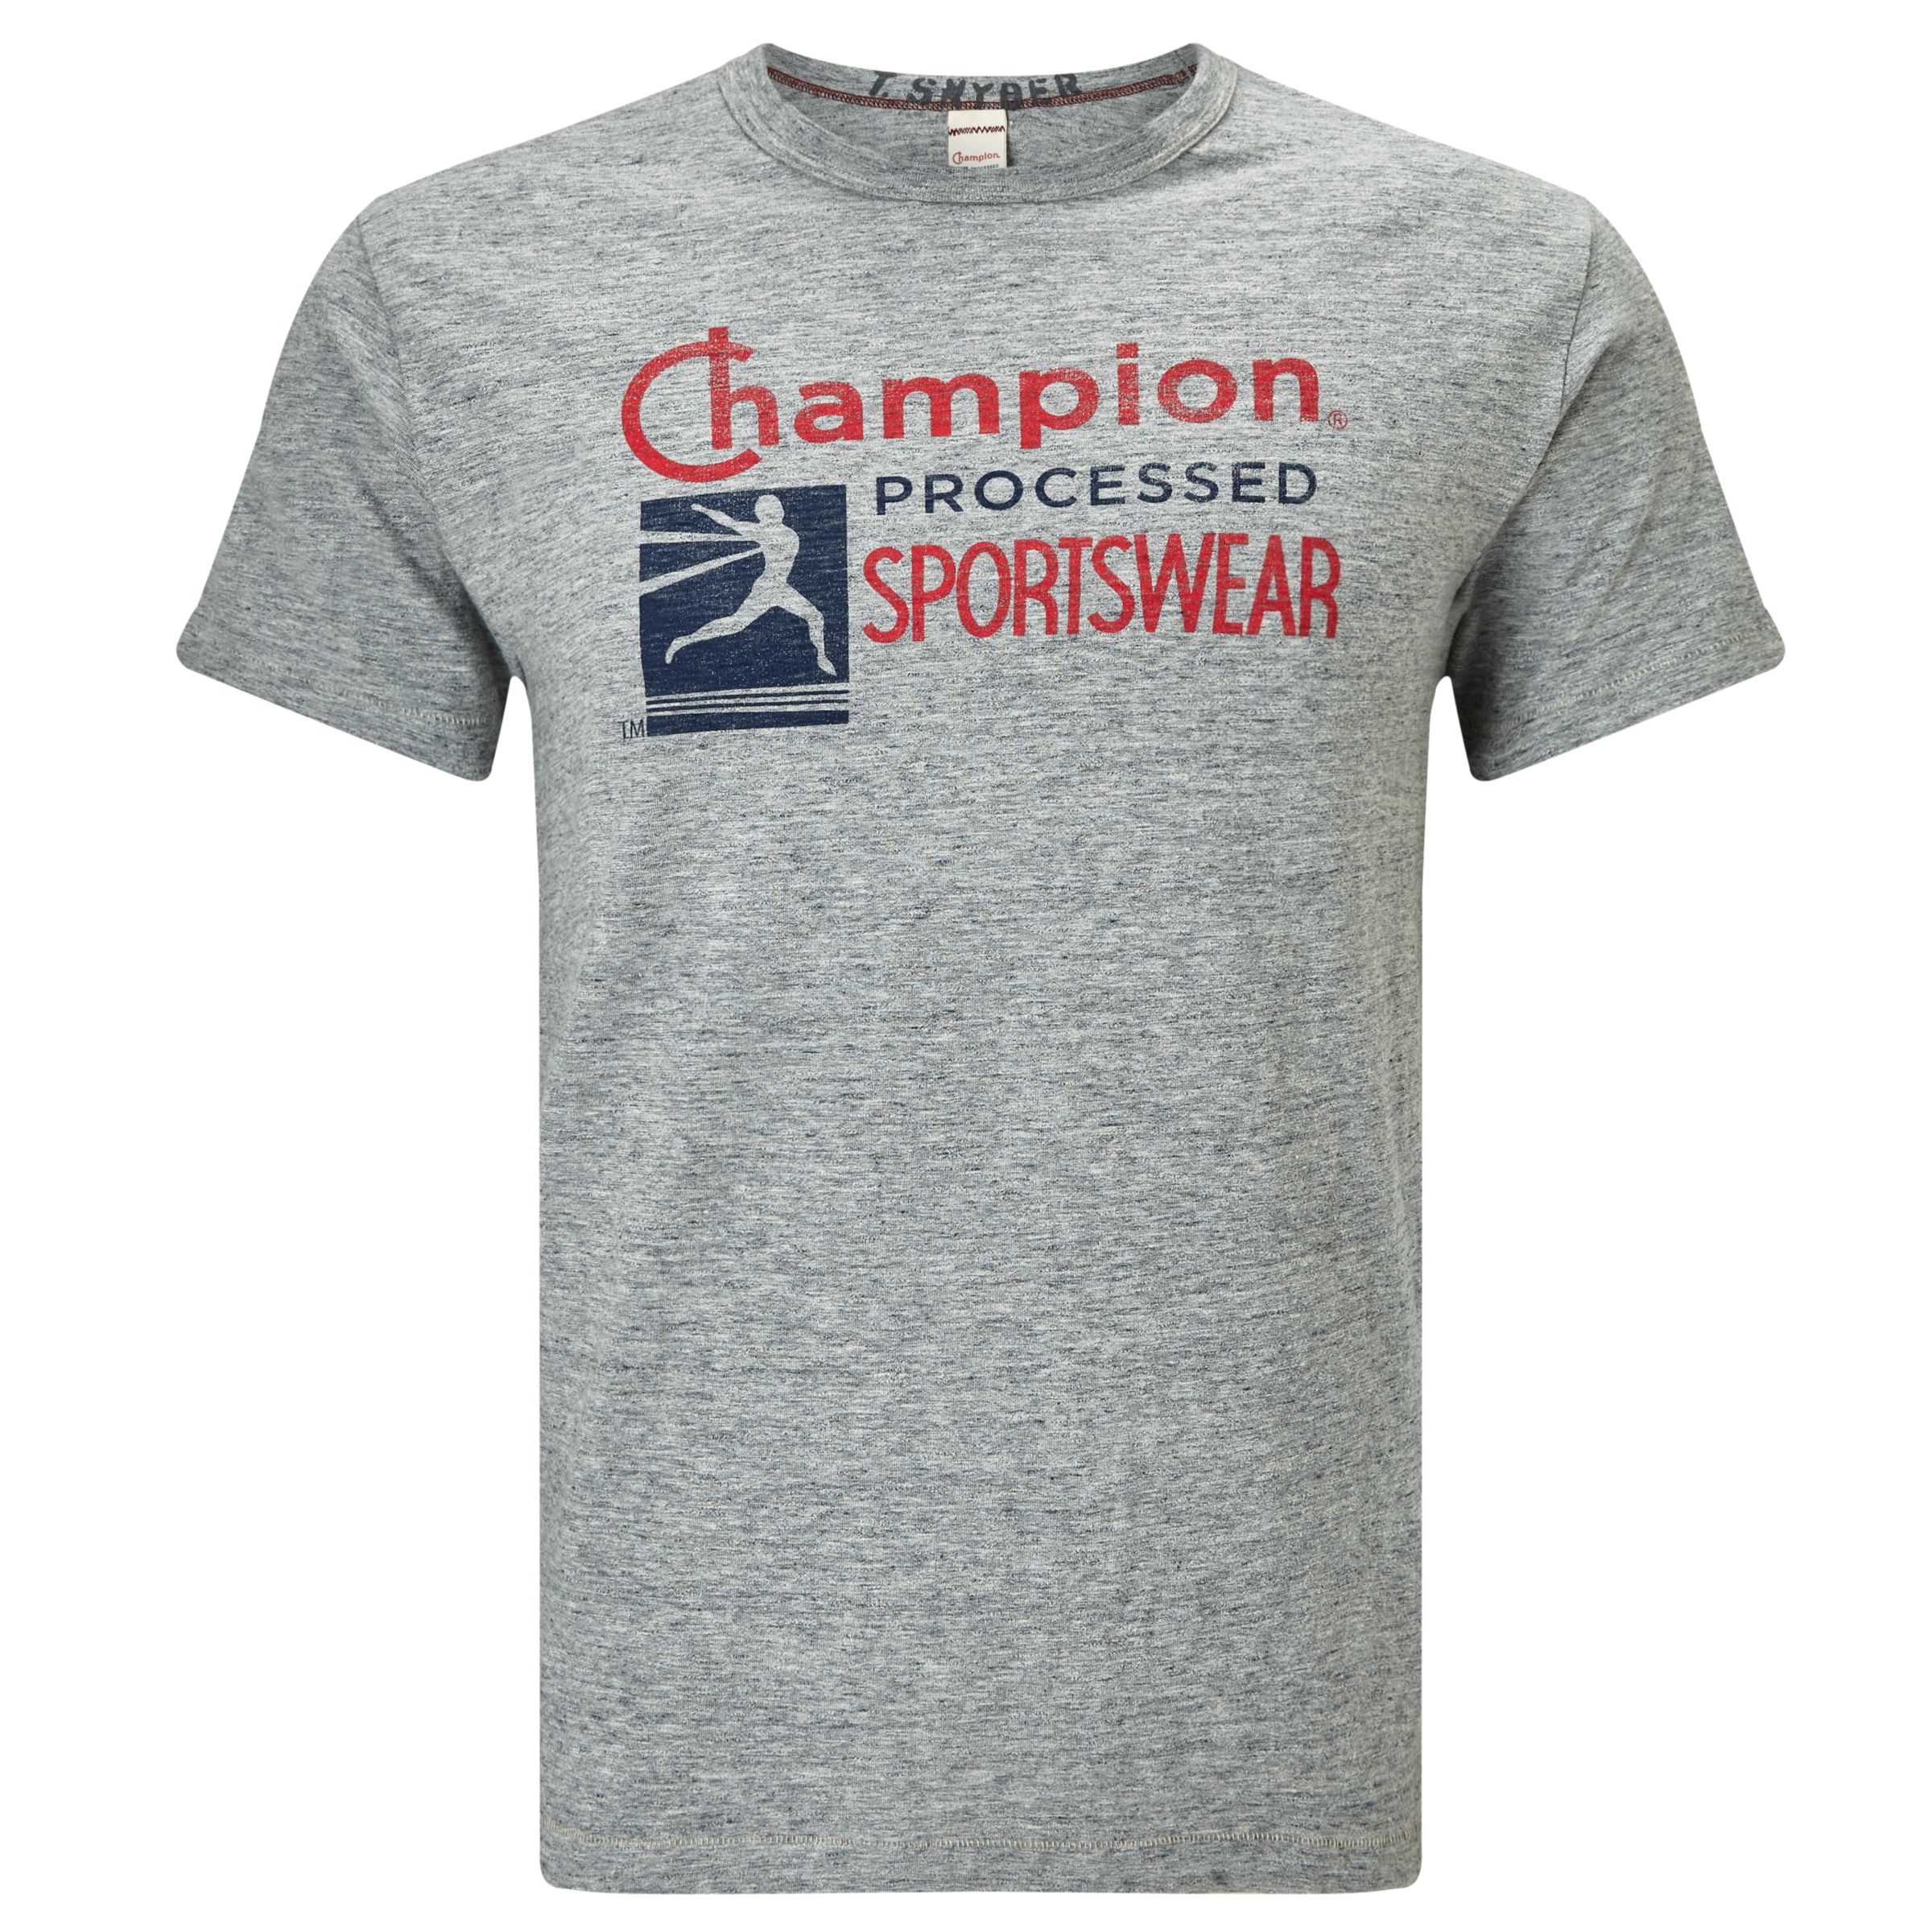 champion sportswear online